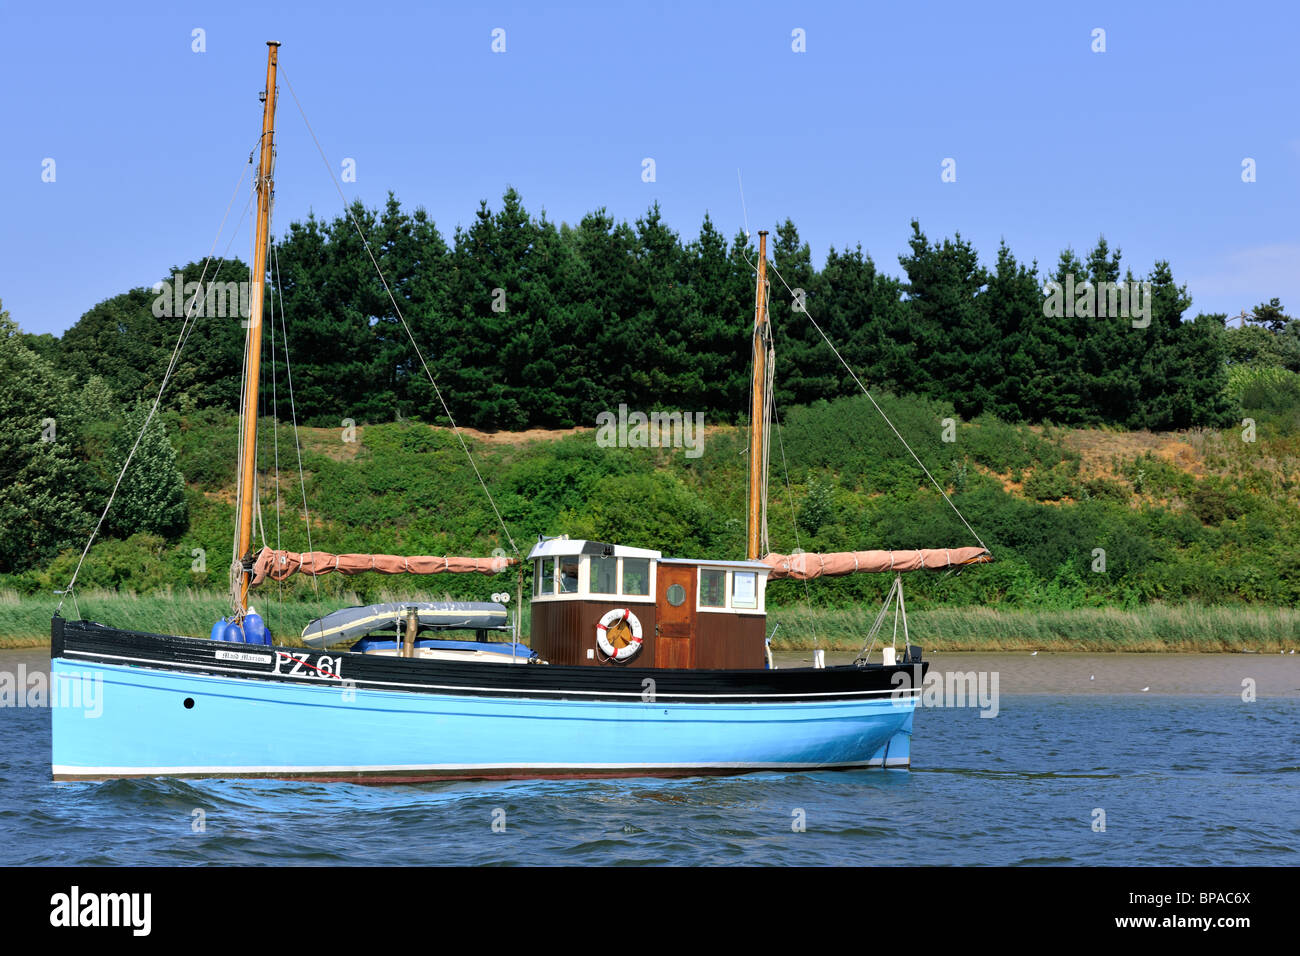 Maid Marion - Sailing boat on the estuary Stock Photo